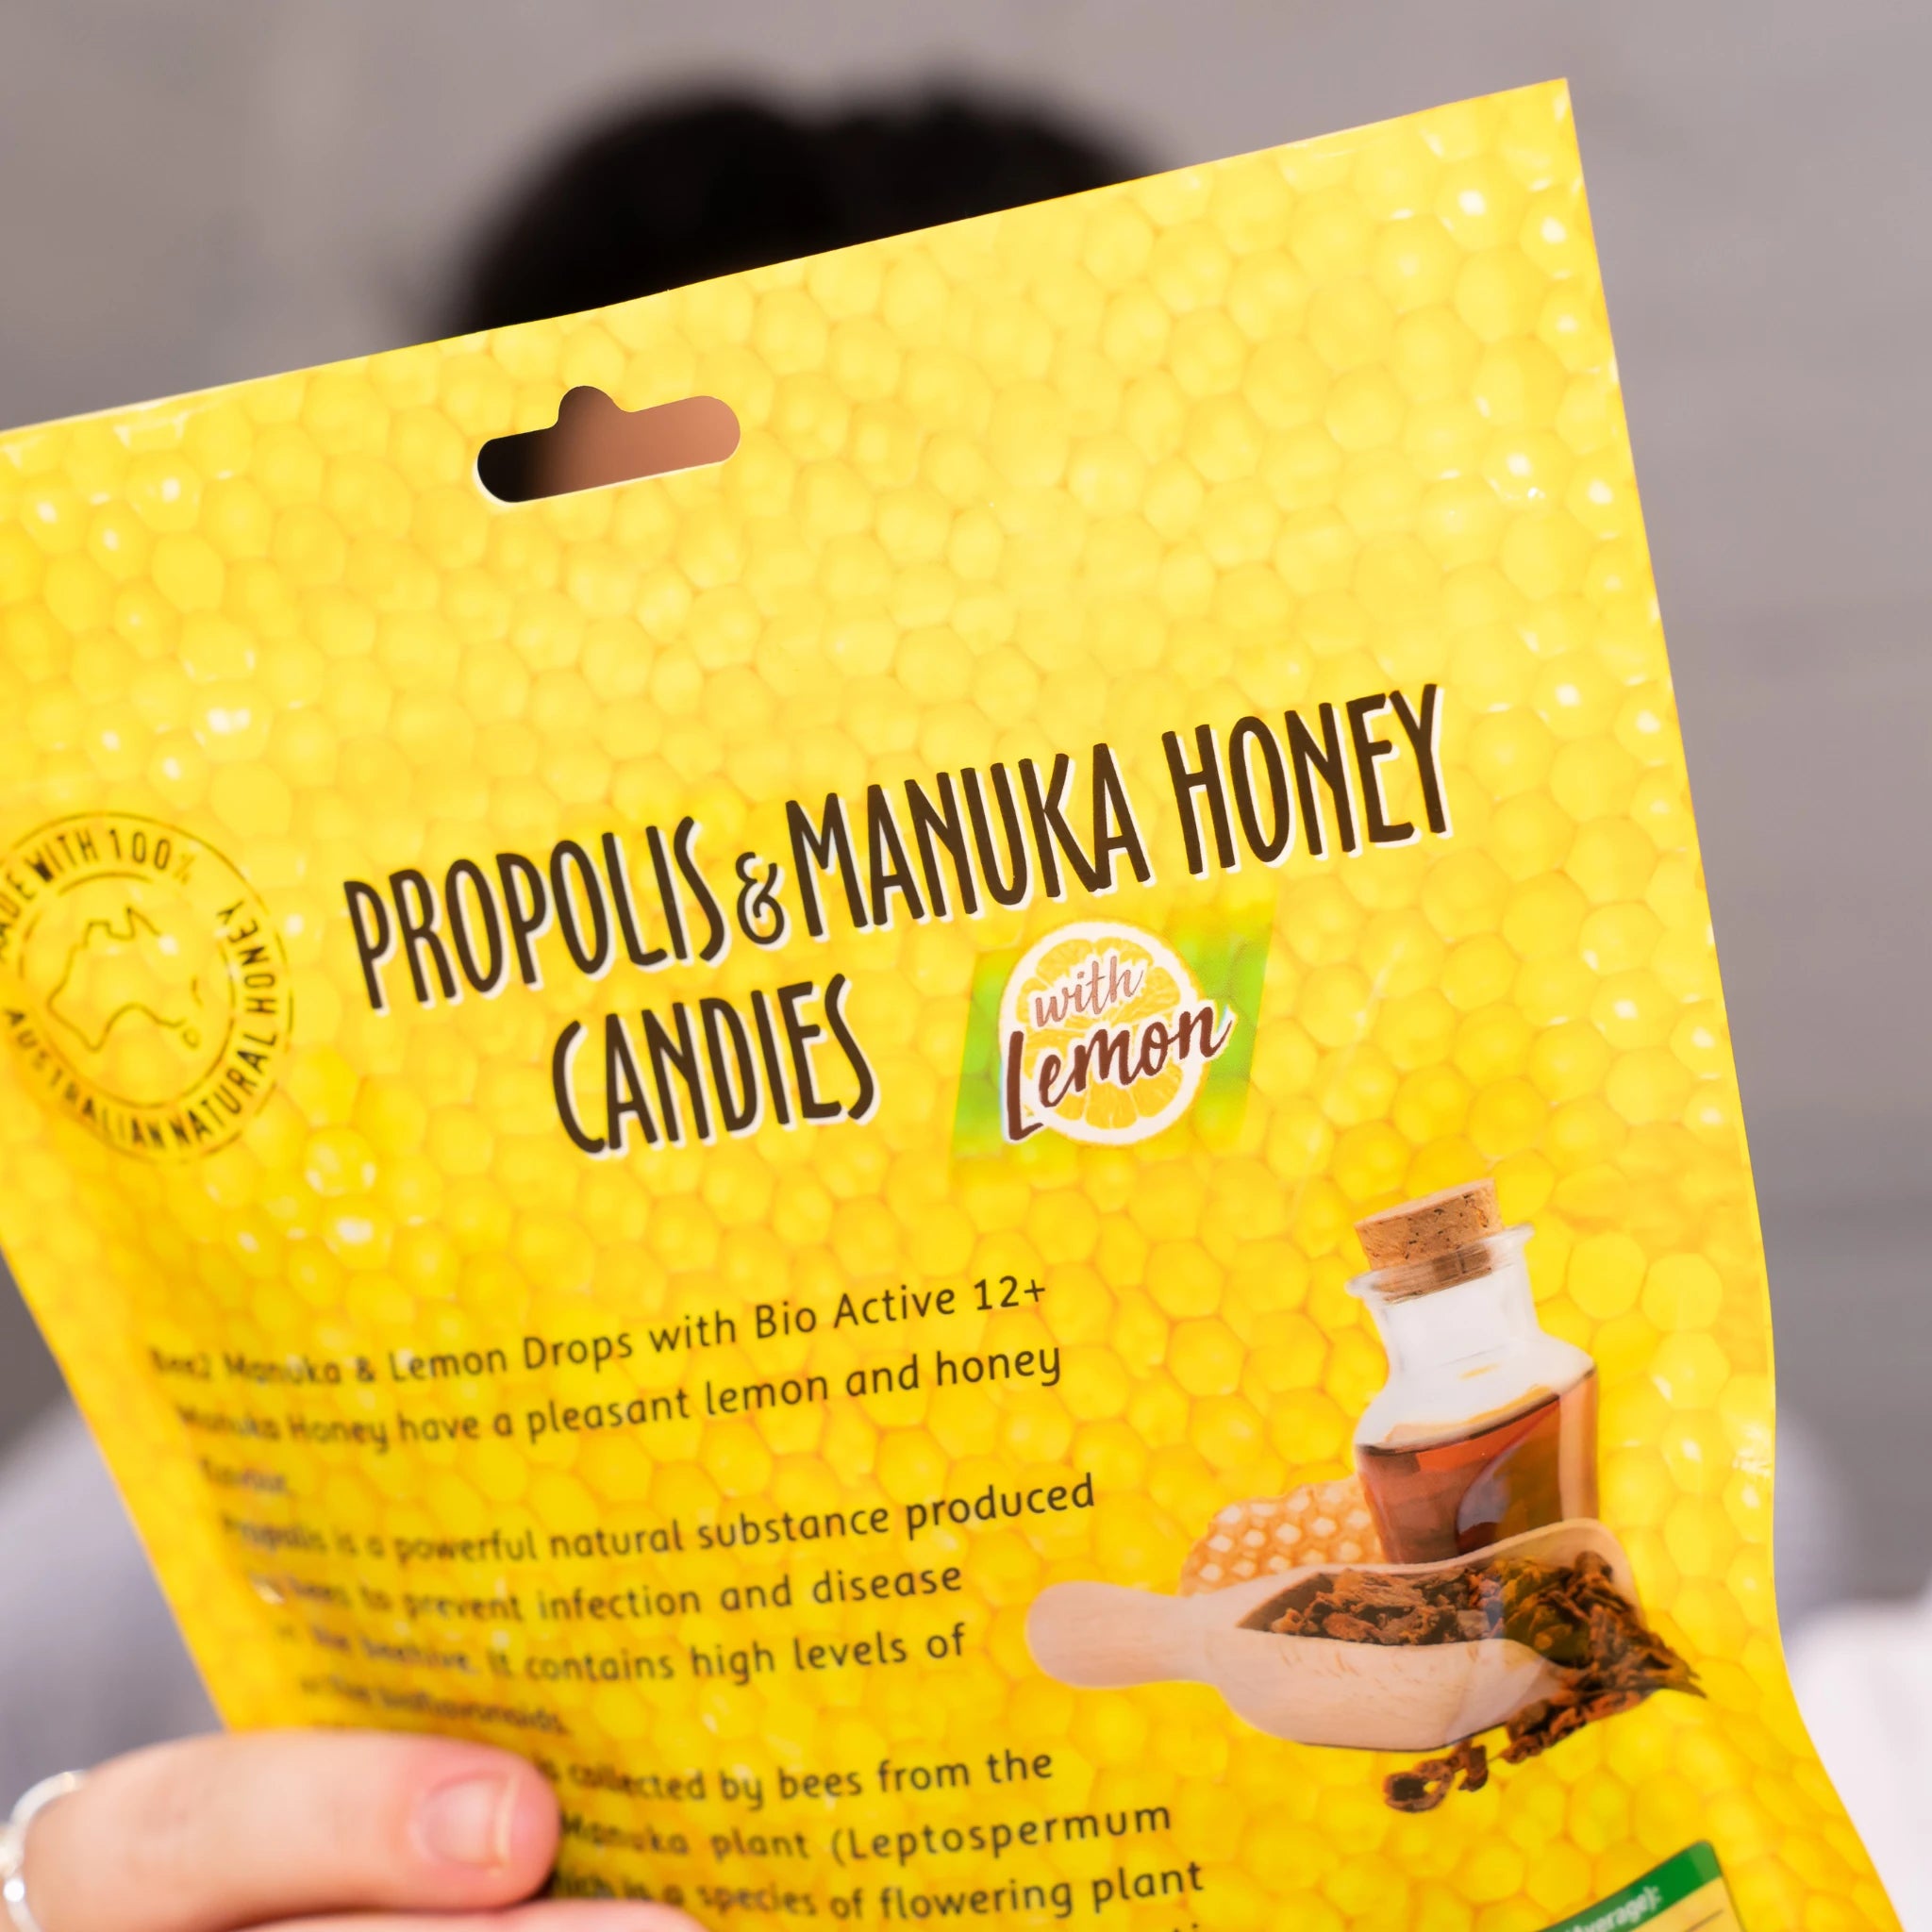 Bee2 Propolis & Manuka Honey Candies